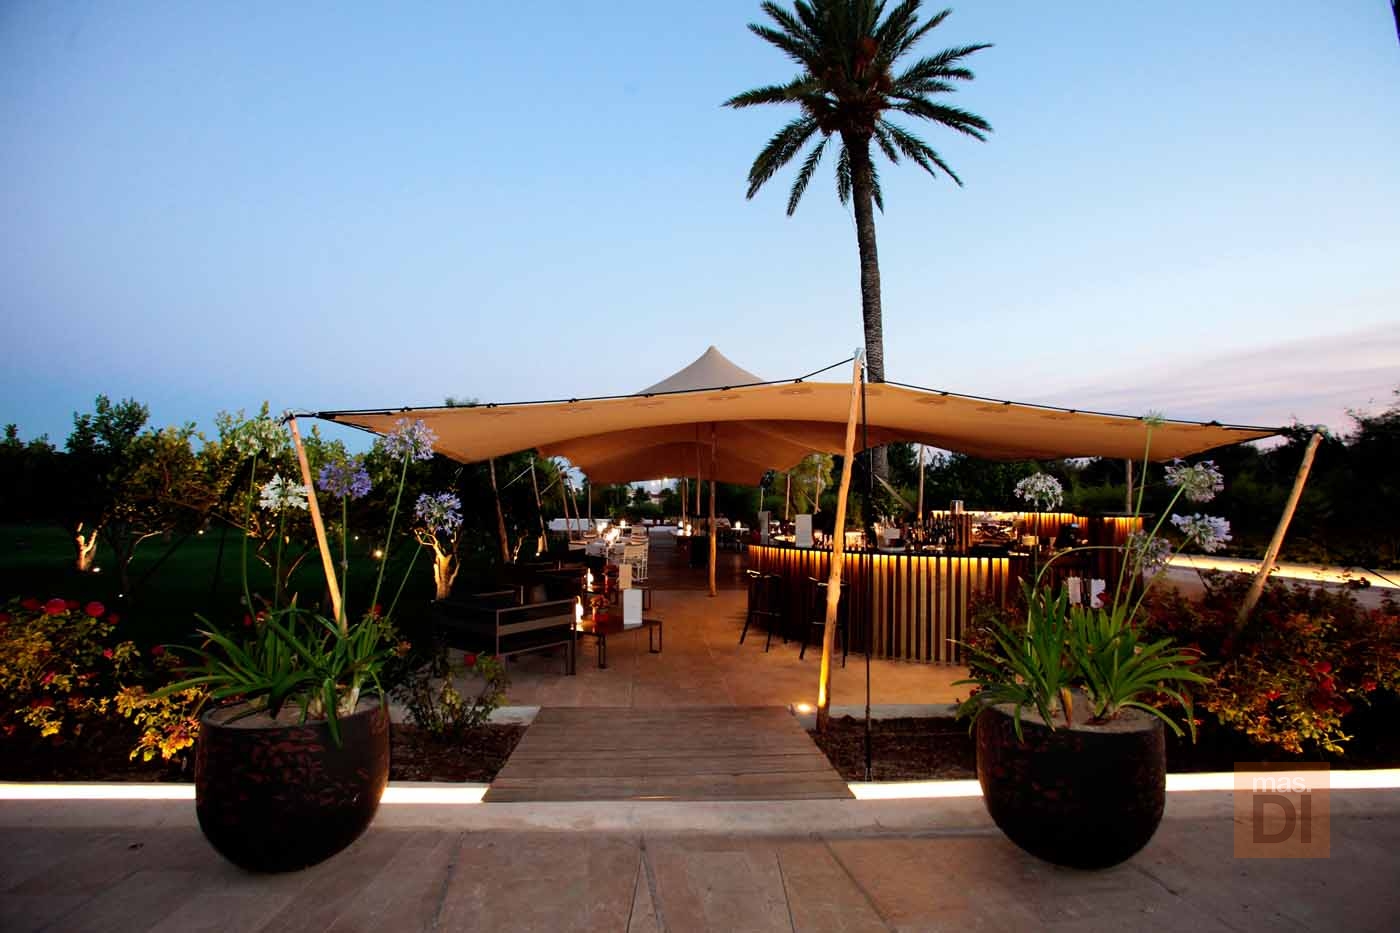 Hotel Xereca. Calidad total en plena naturaleza junto a Ibiza